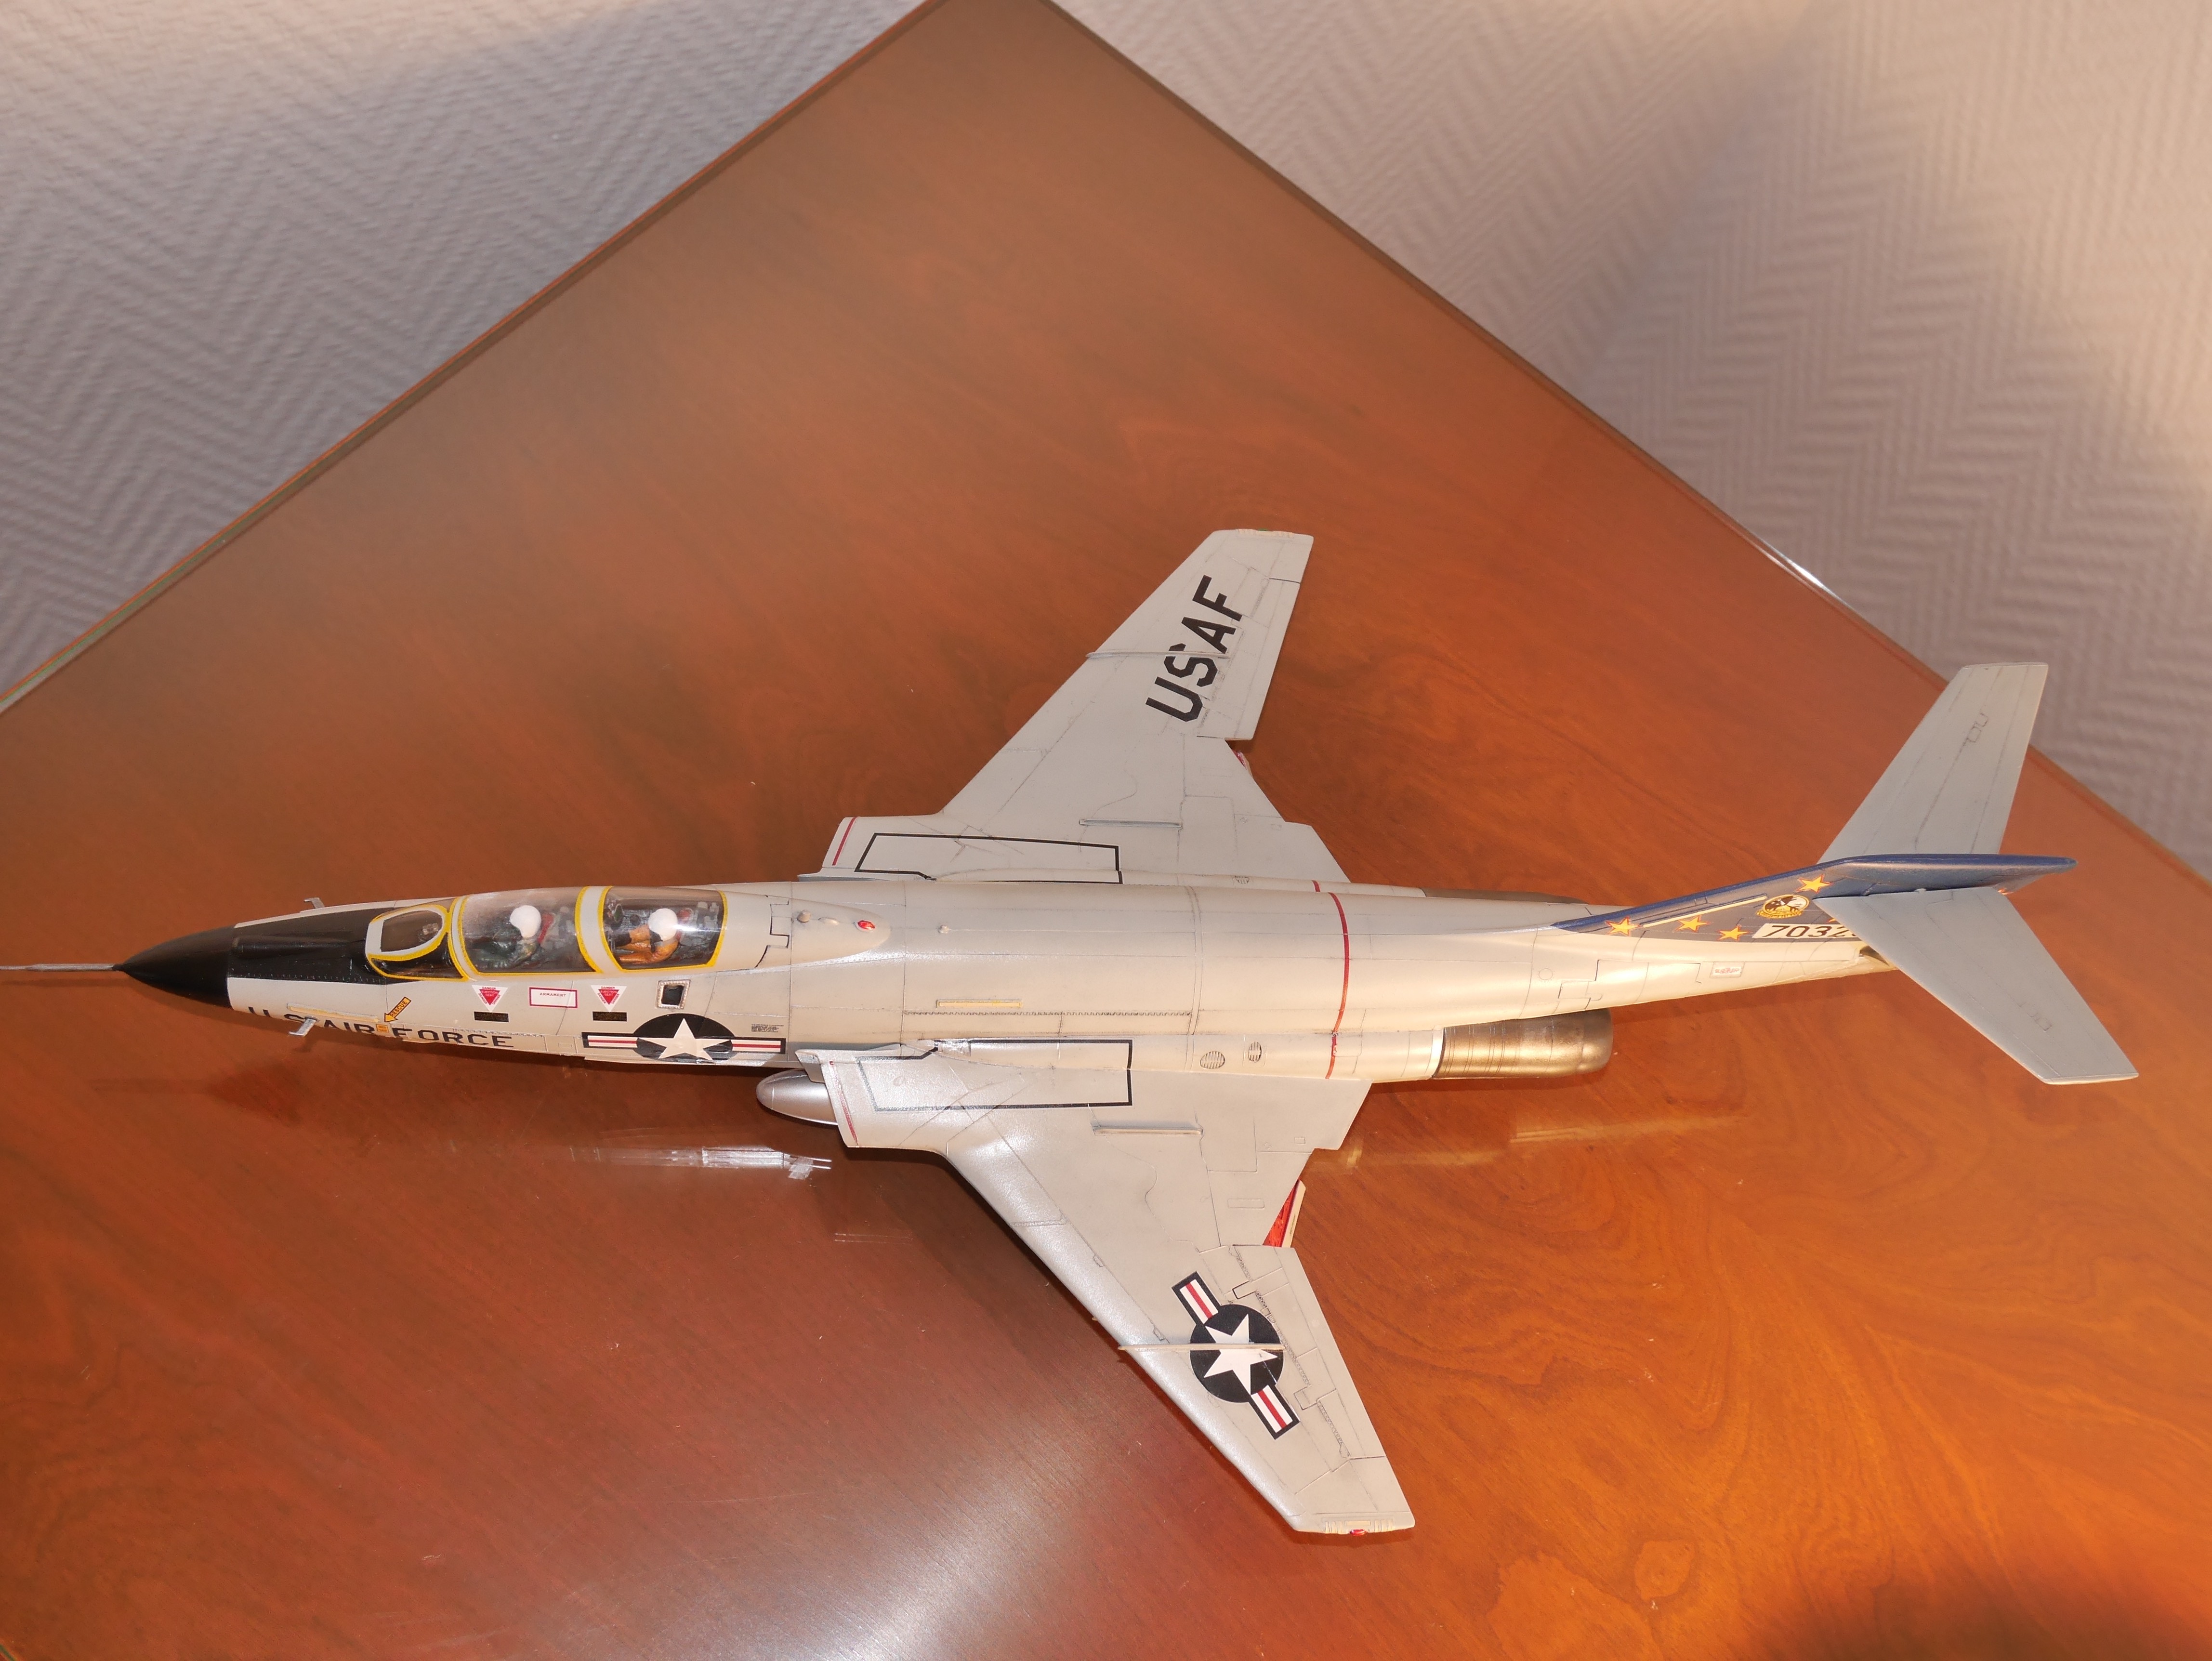  McDonnell F-101B Voodoo - Monogram 16121411095019107014707957